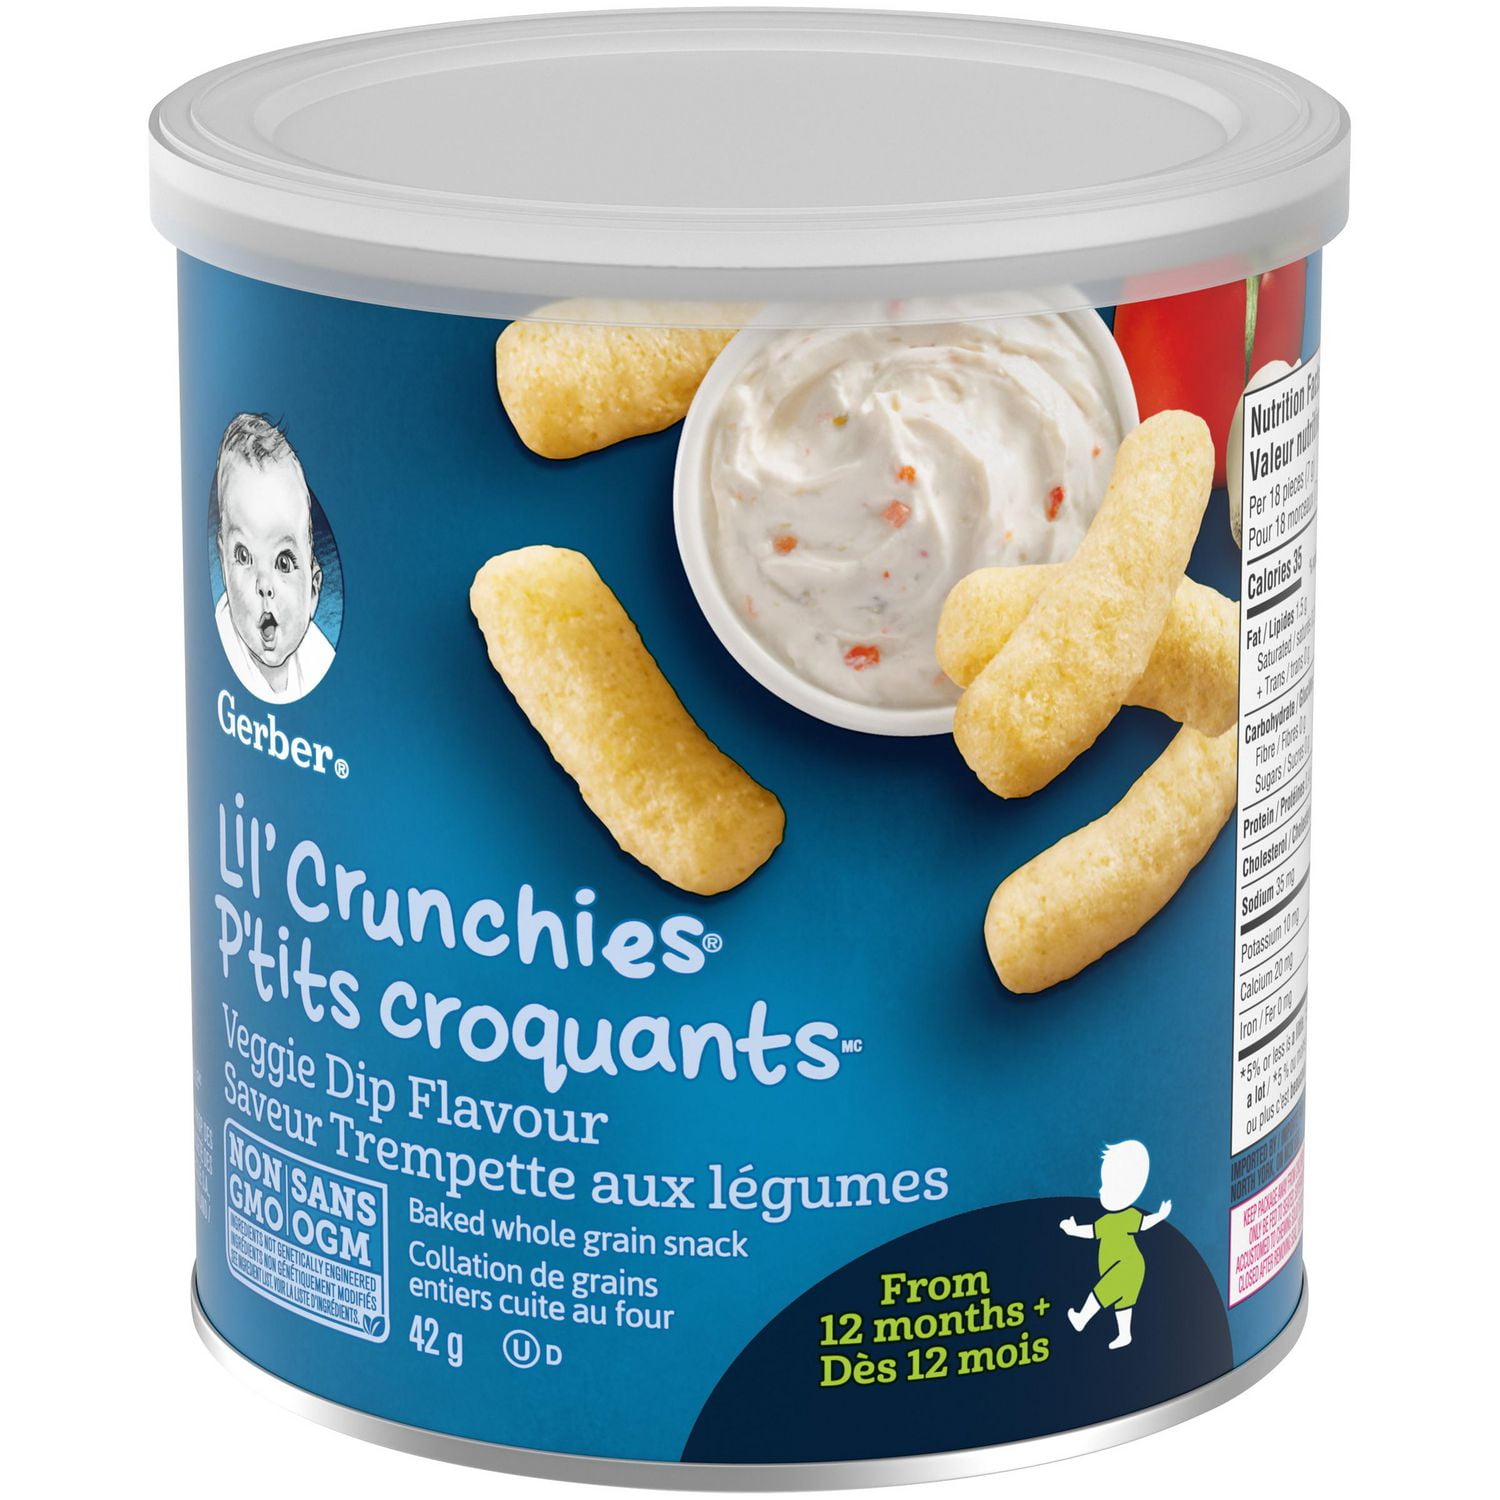 GERBER® LIL' CRUNCHIES®, Veggie Dip, Toddler Snacks 42 g, 42 GR 